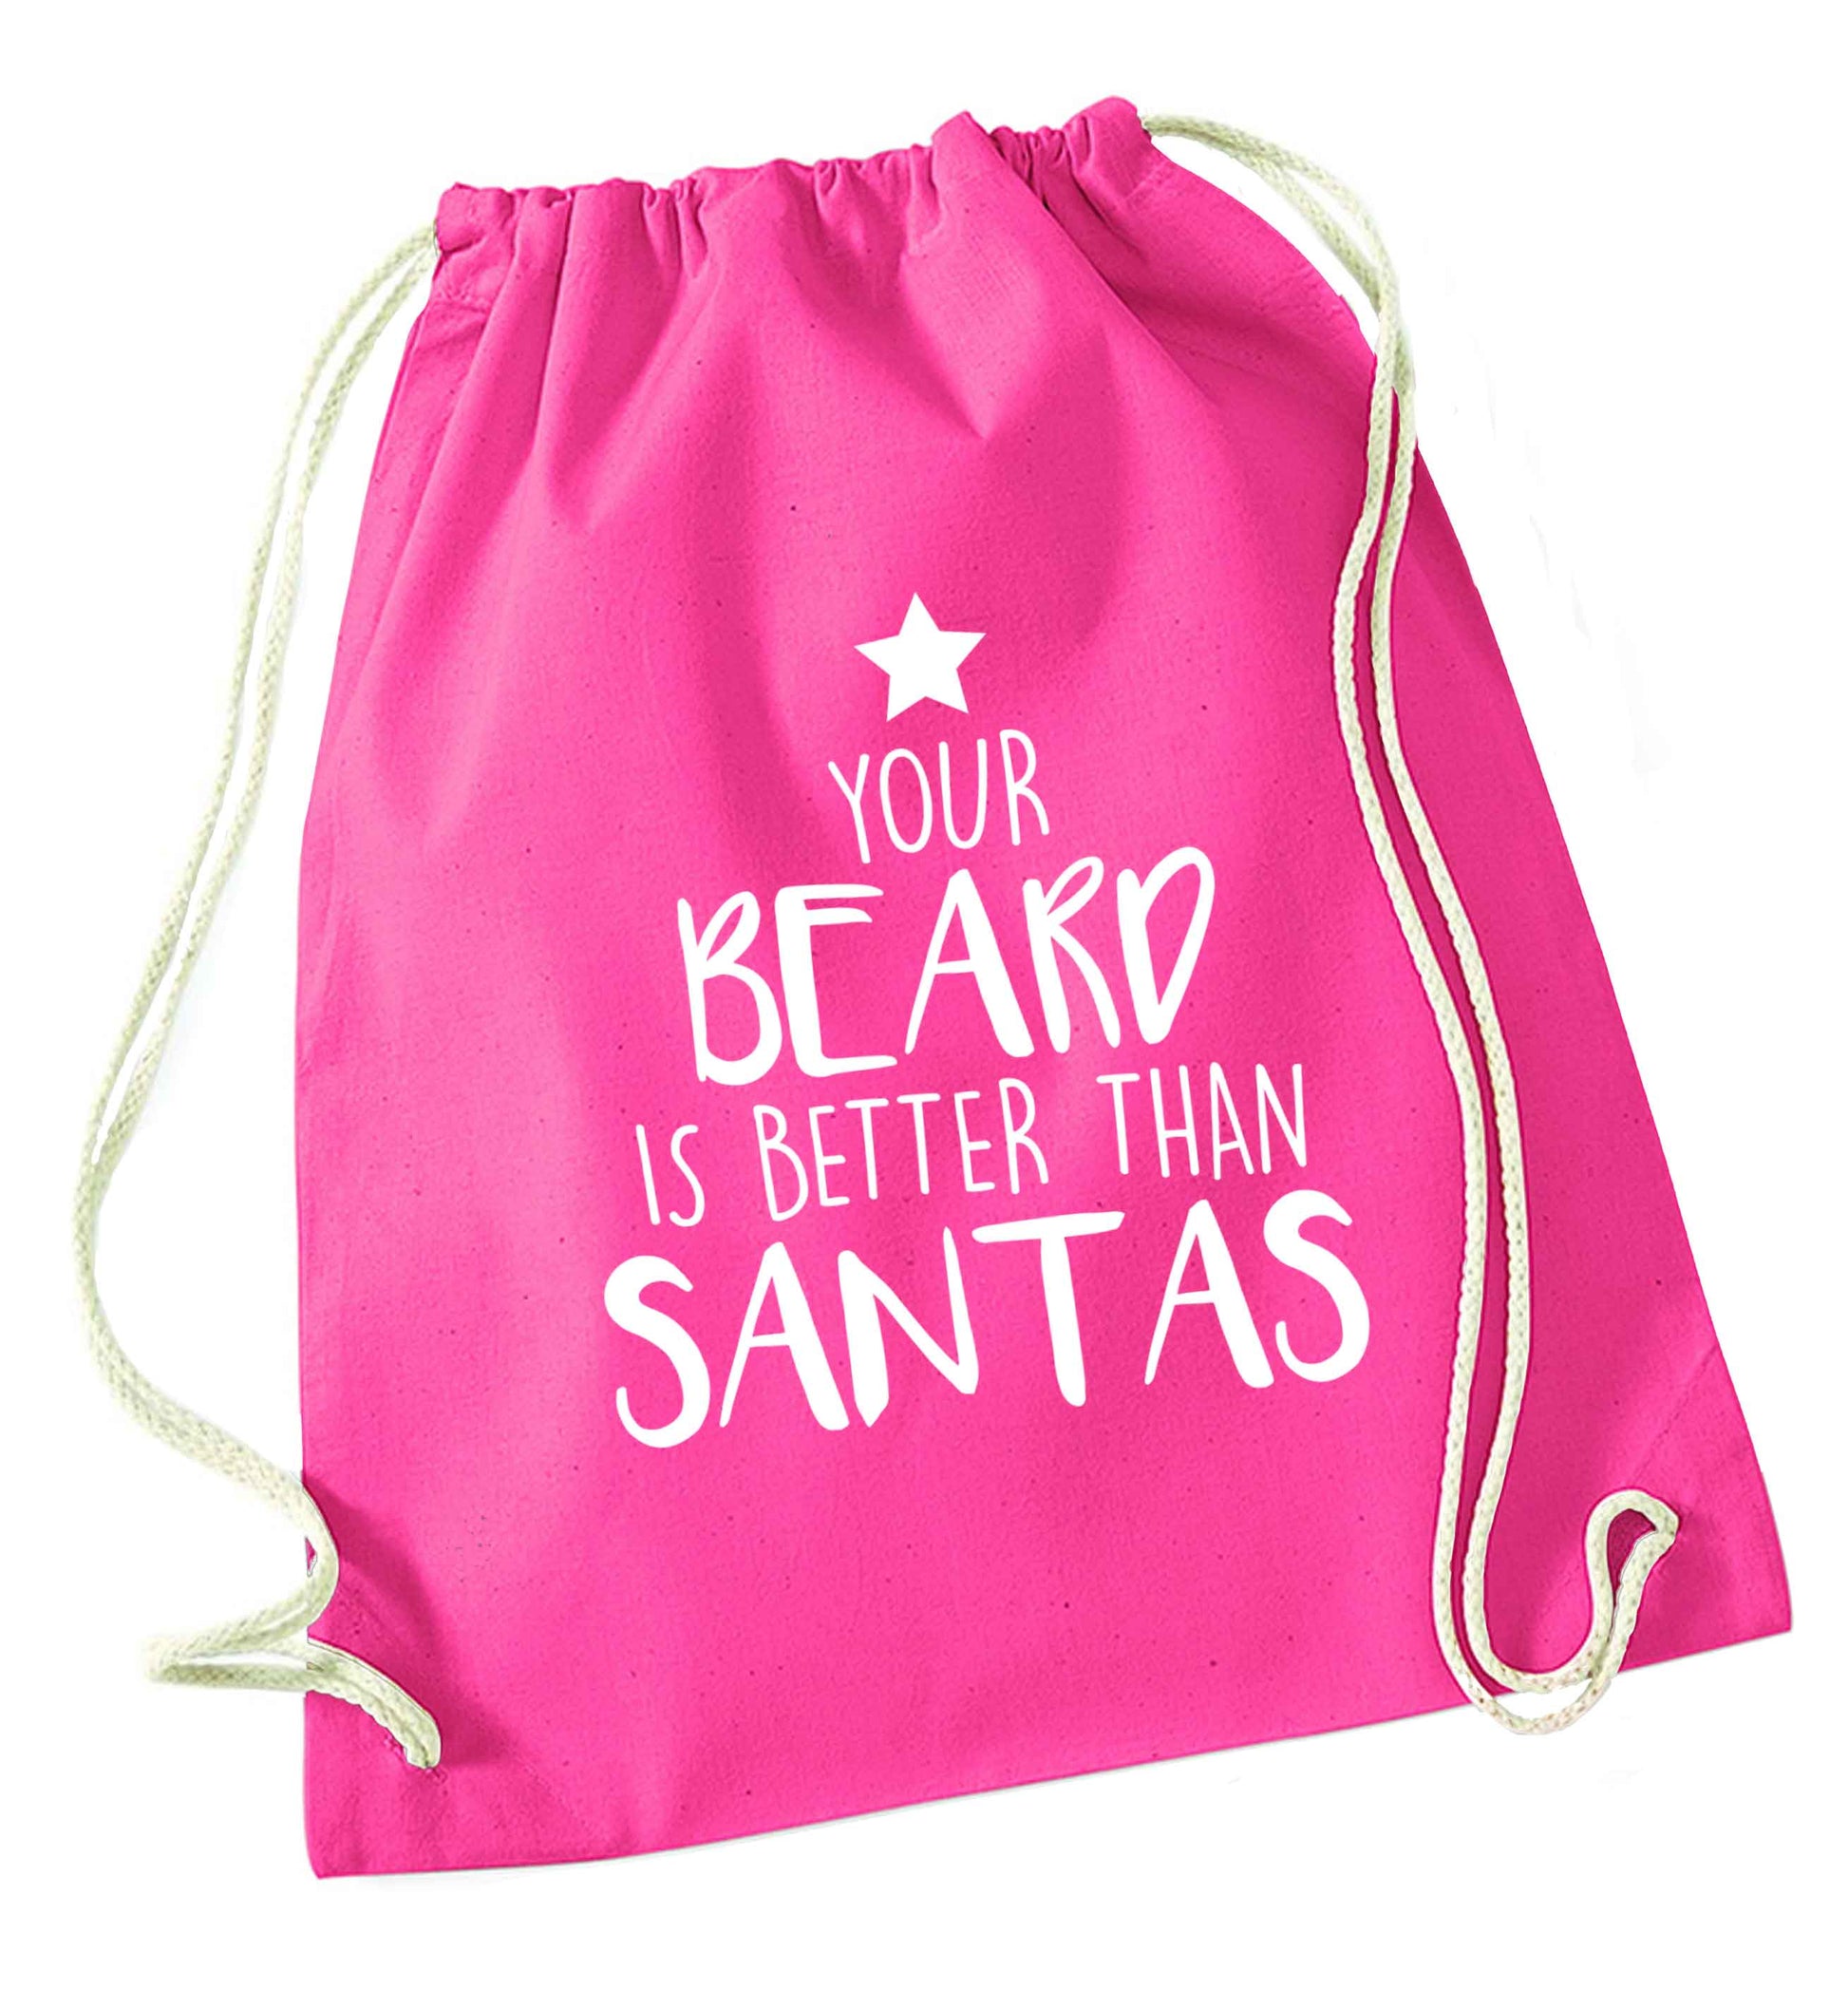 Your Beard Better than Santas pink drawstring bag